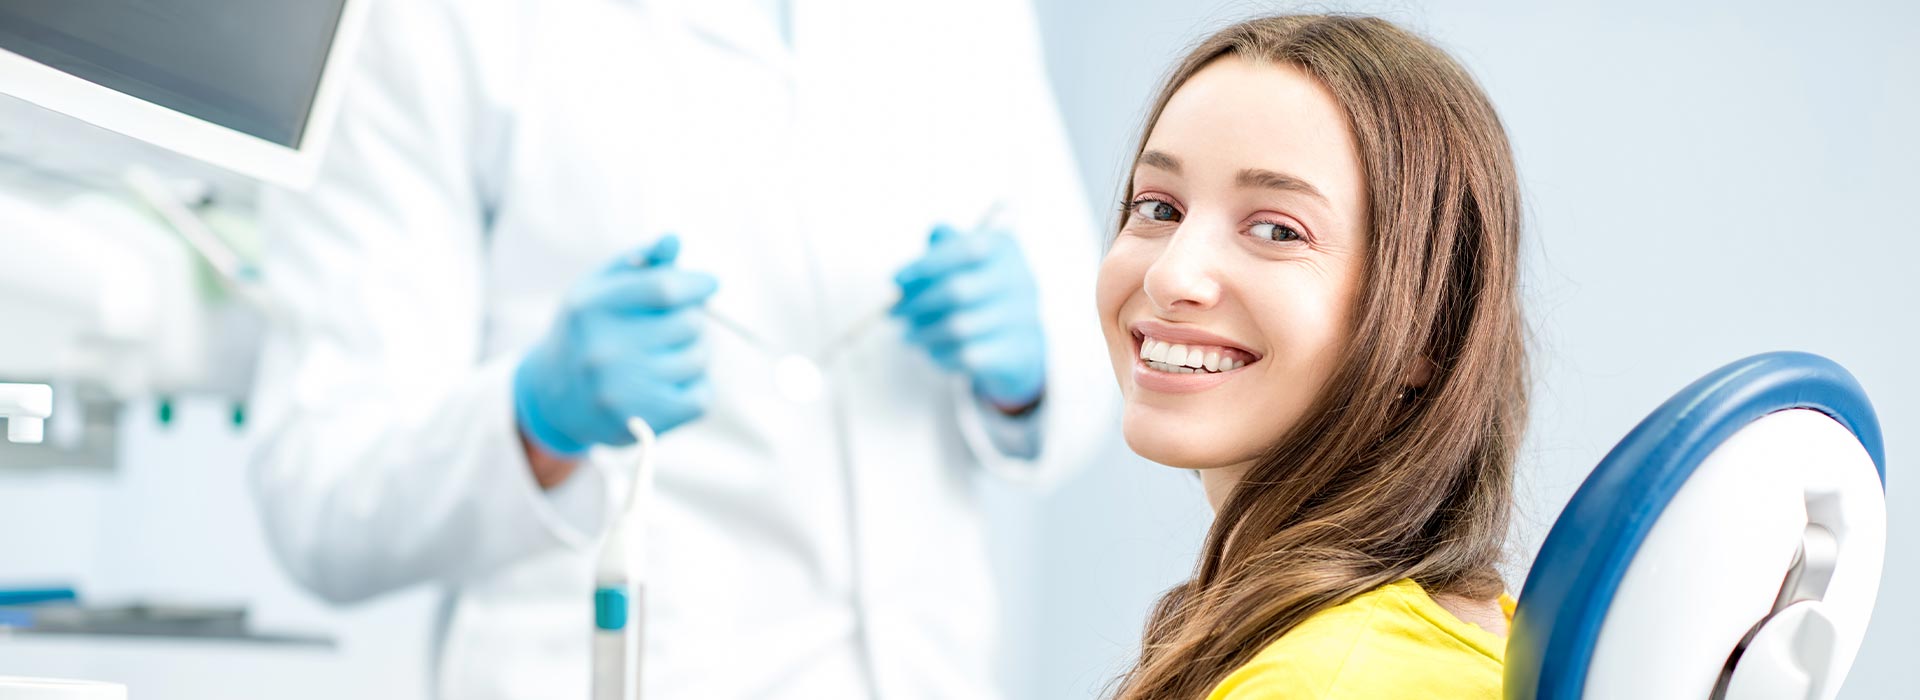 Dentistry as a branch of medicine